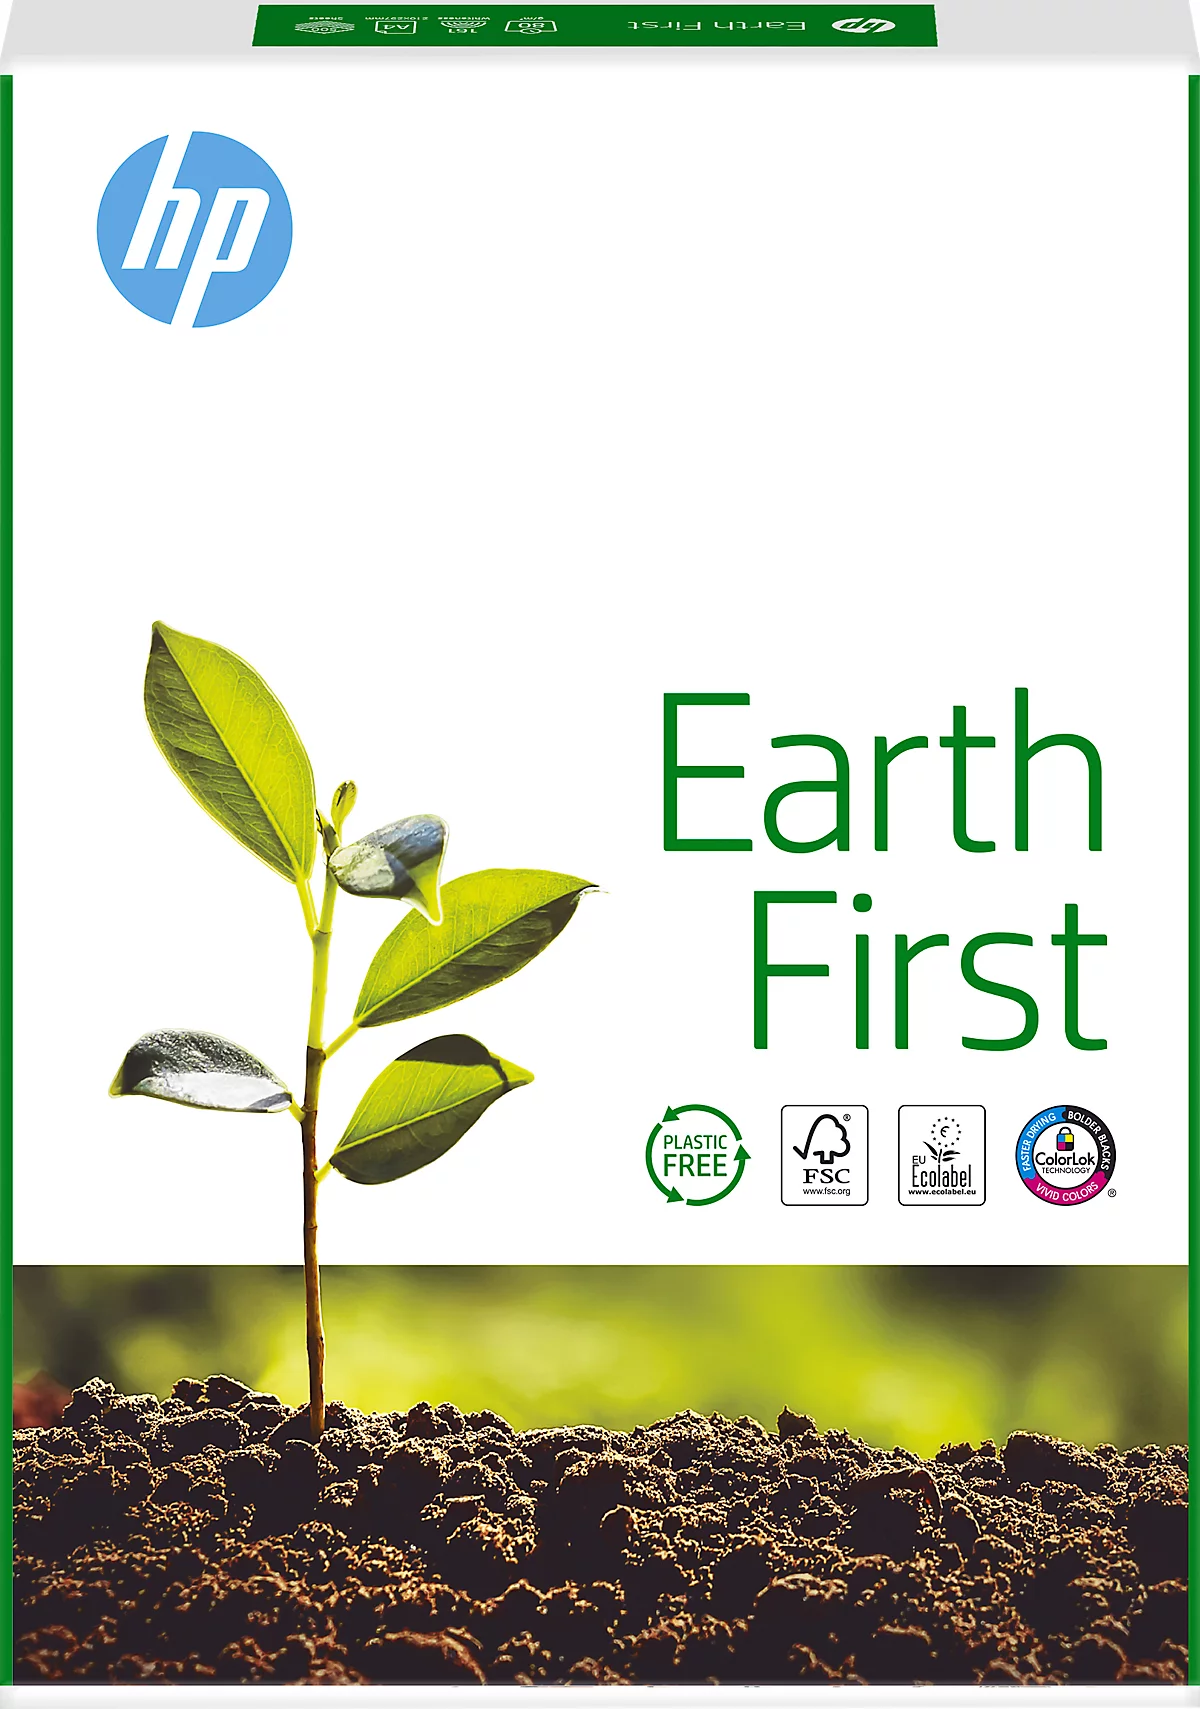 Kopierpapier HP Earth First CHP140, klimaneutral, DIN A4, 80 g/m², Reinweiß, 1 Karton = 5 x 500 Blatt